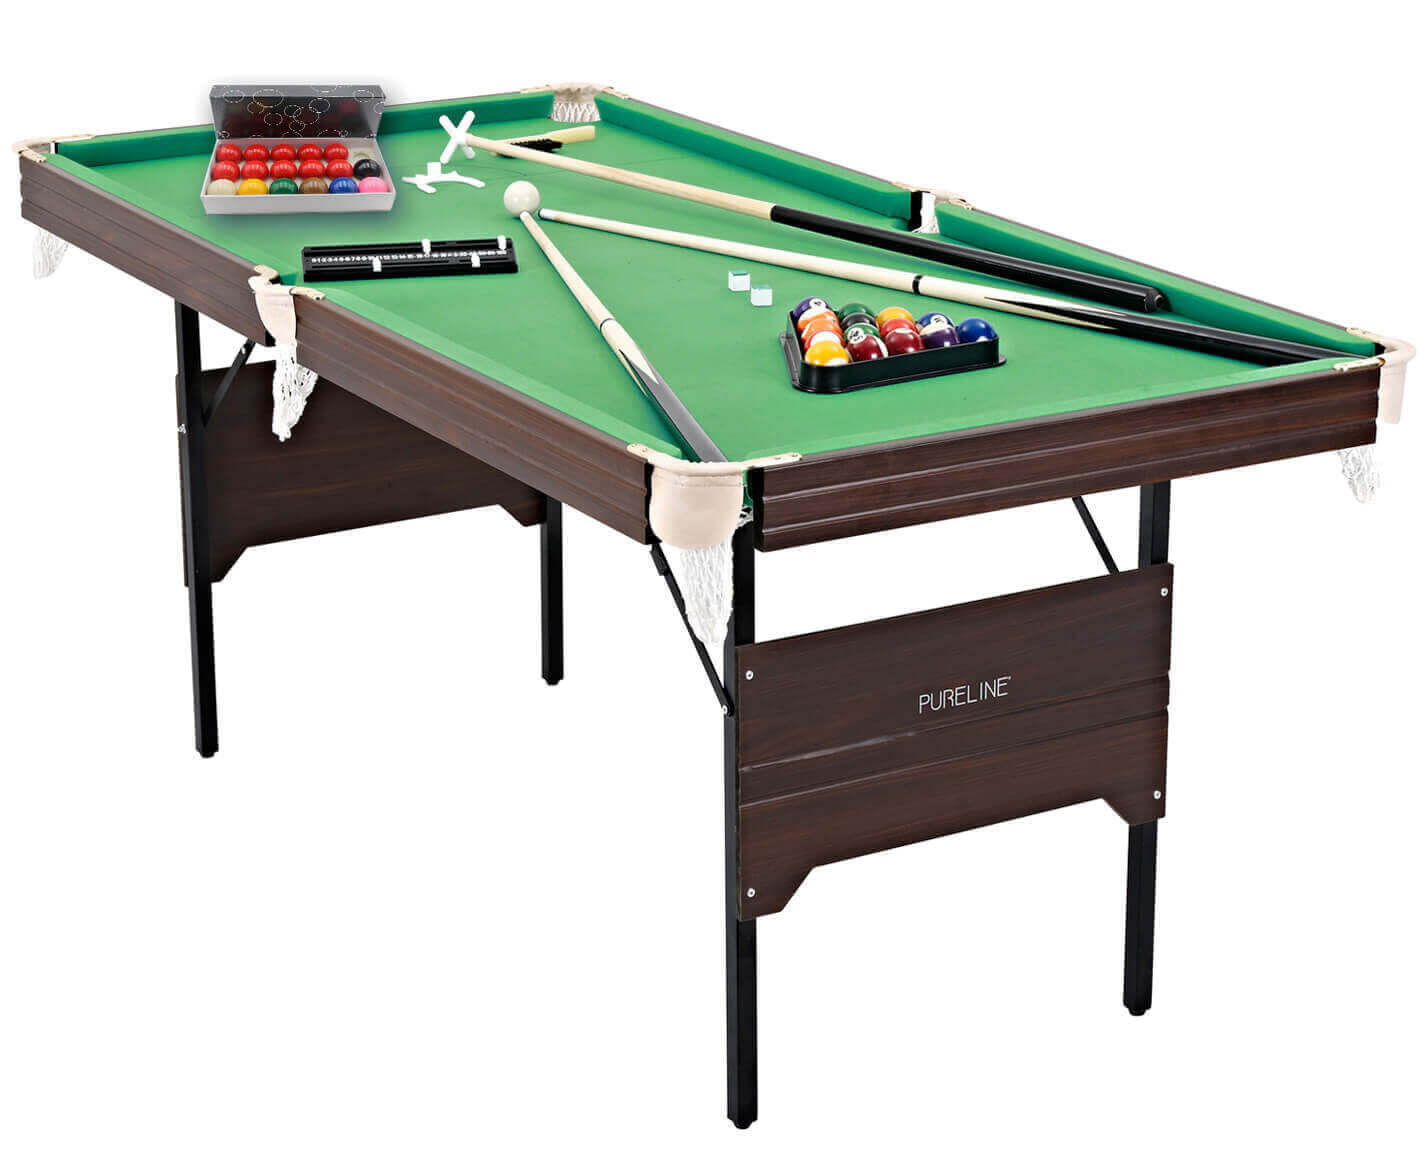 Pureline 6ft Folding Pool & Snooker Table